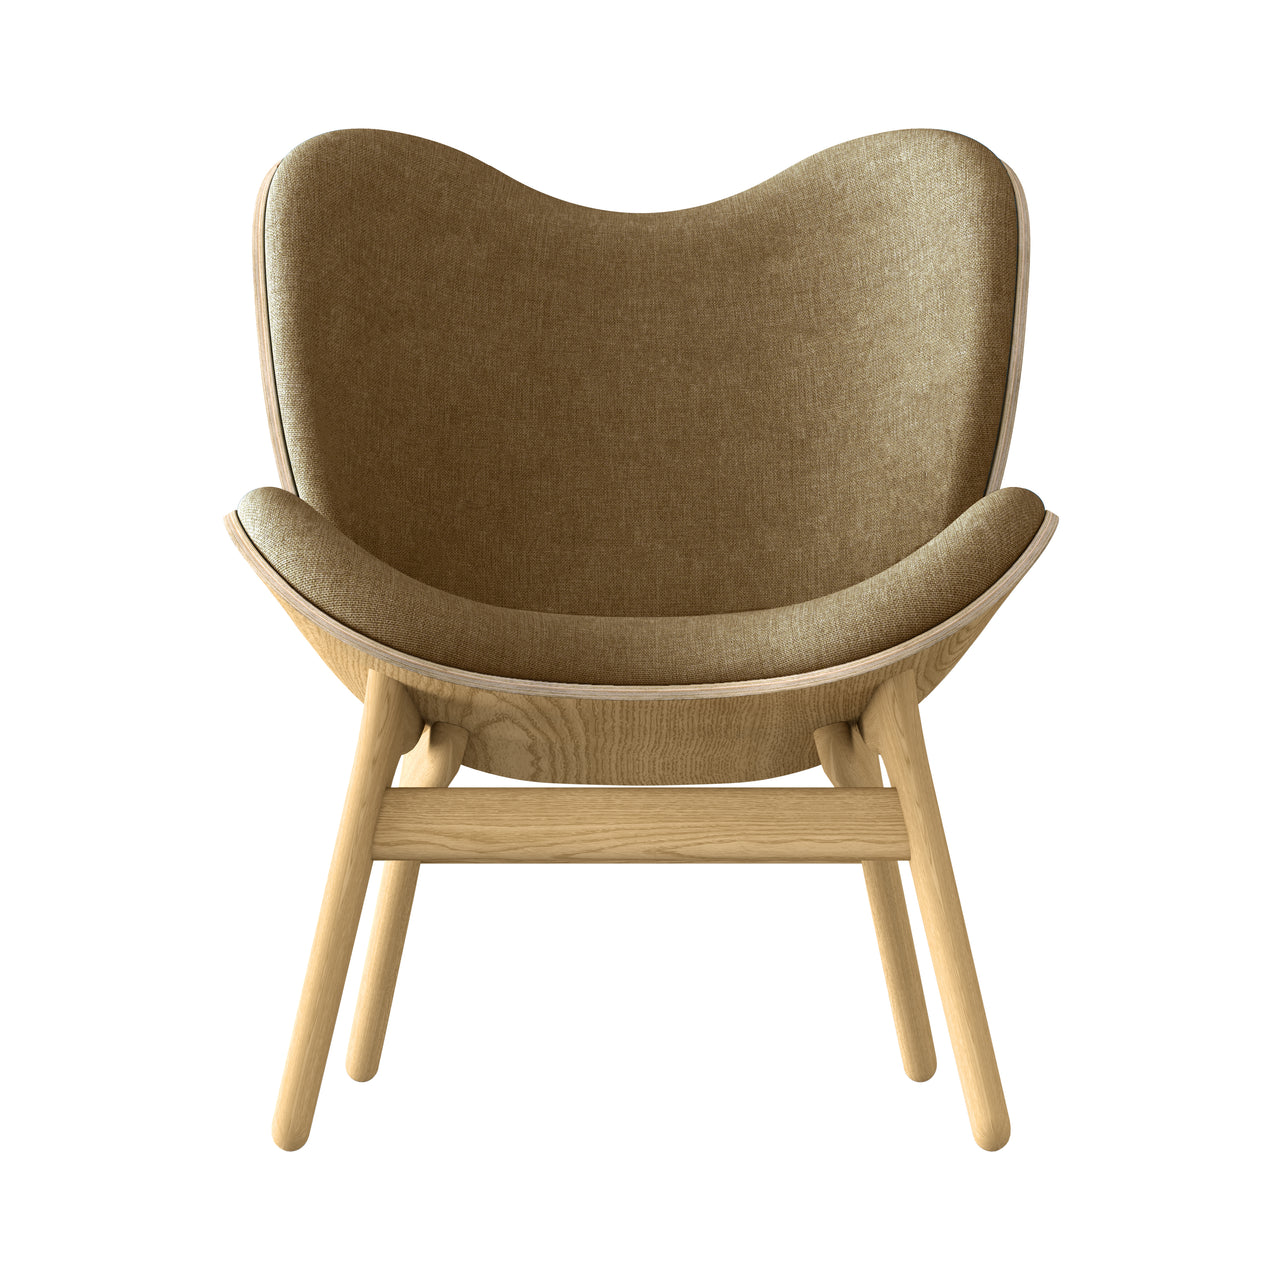 A Conversation Piece Lounge Chair: Oak + Sugar Brown